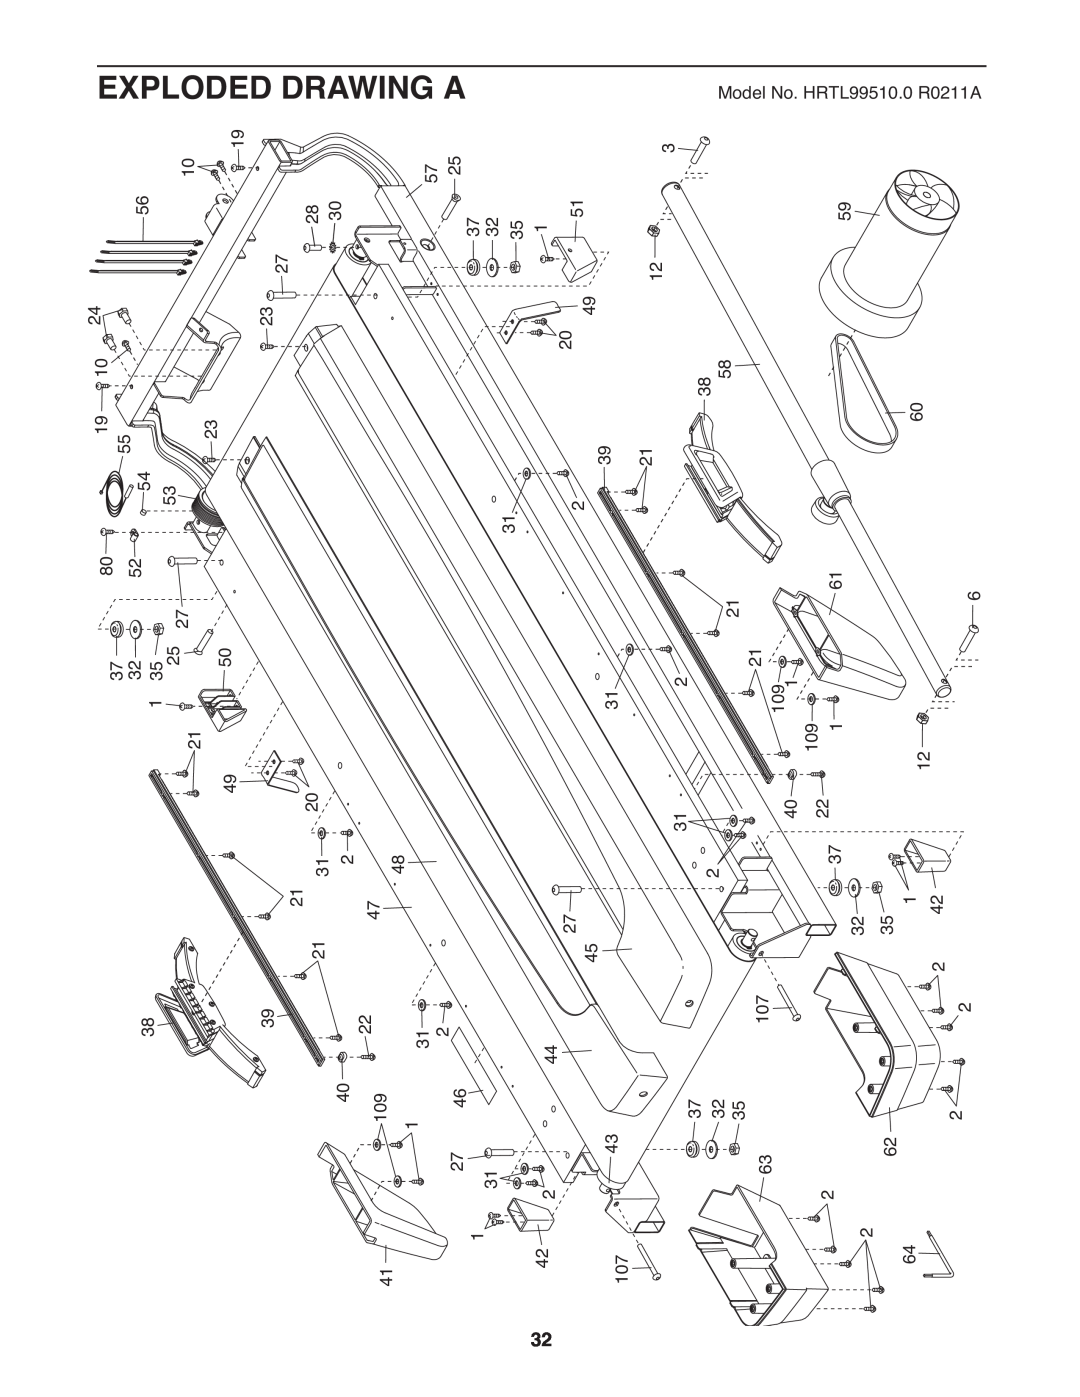 Healthrider manual Exploded Drawing A, Model No. HRTL99510.0 R0211A 